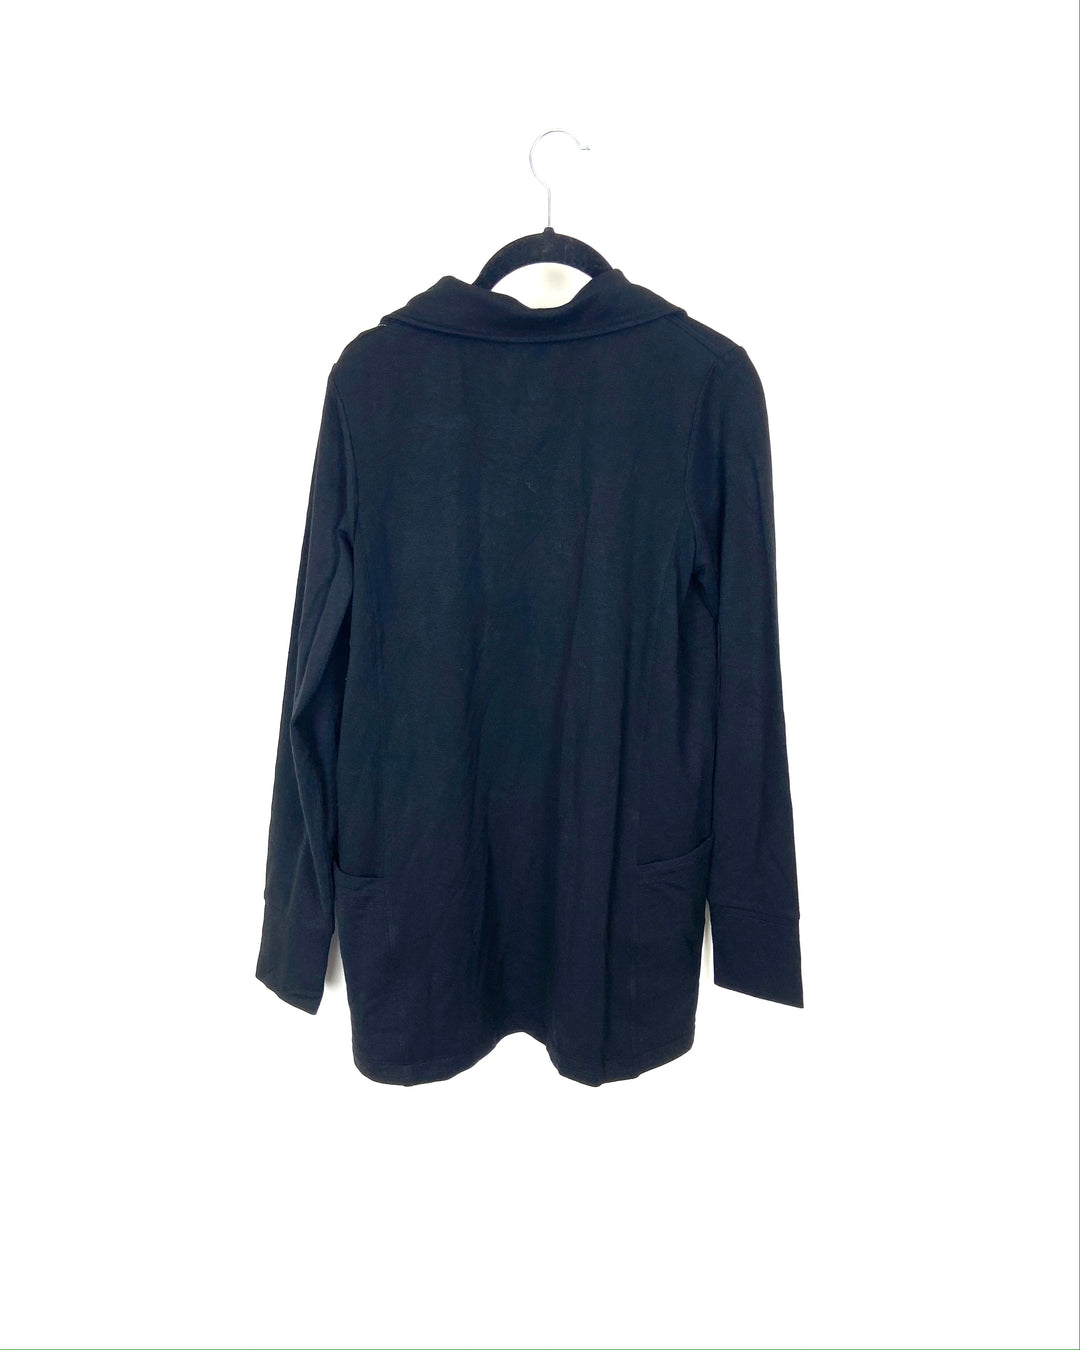 Black Long Sleeve Cardigan - Size 2-4, 6-8 and 10-12, 14-16